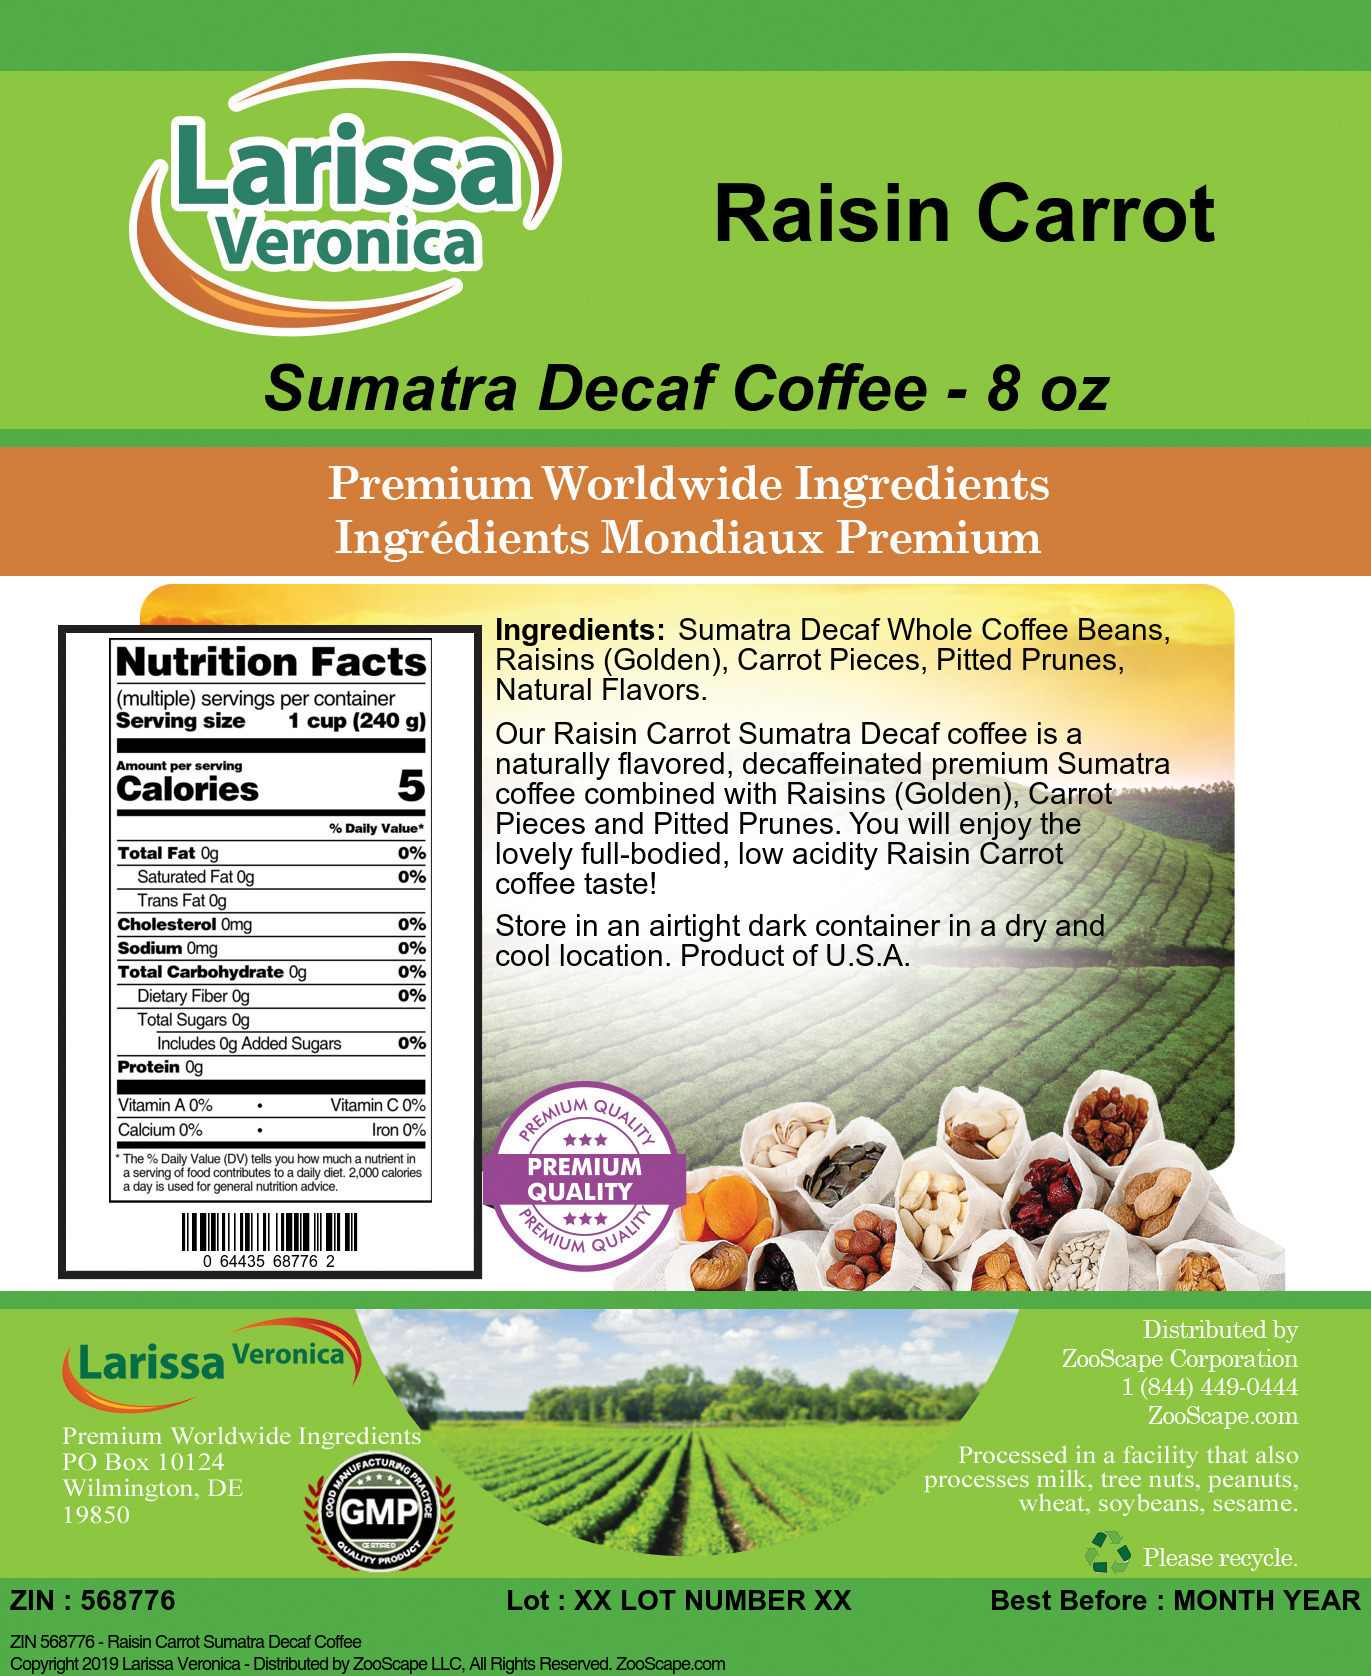 Raisin Carrot Sumatra Decaf Coffee - Label